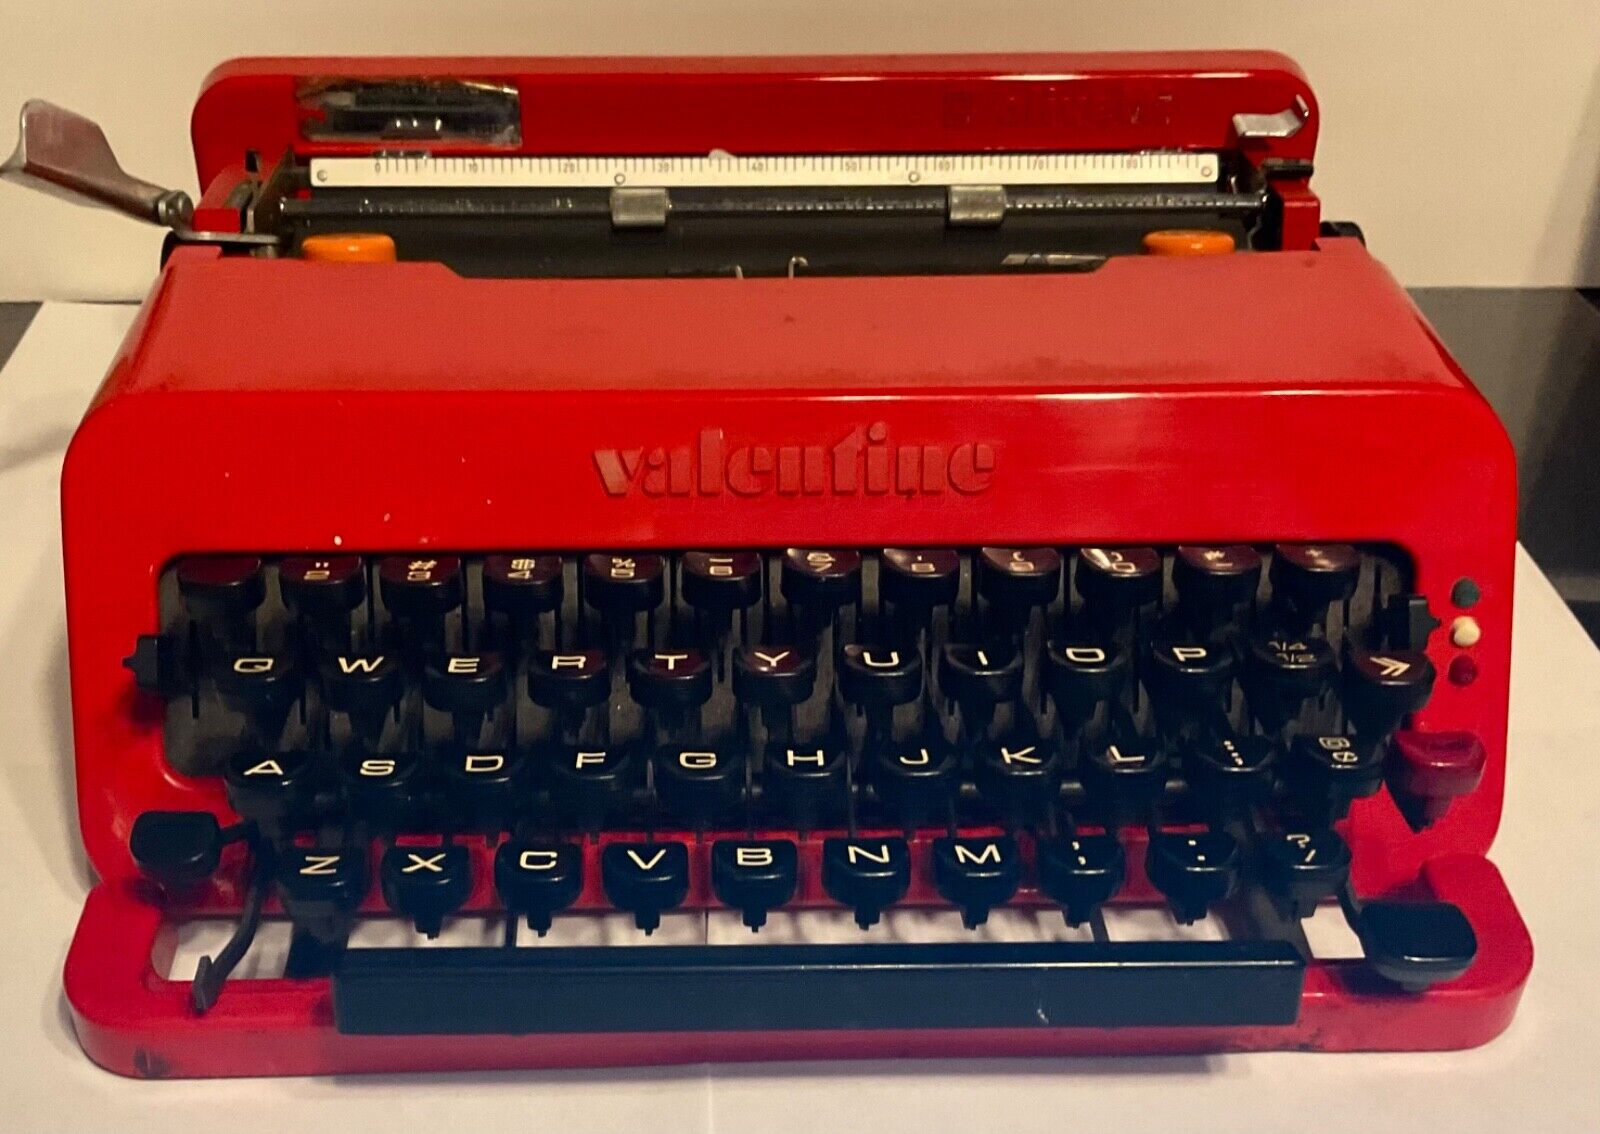 Vintage Olivetti VALENTINE Typewriter  Red 1969 Portable Manual Typewriter